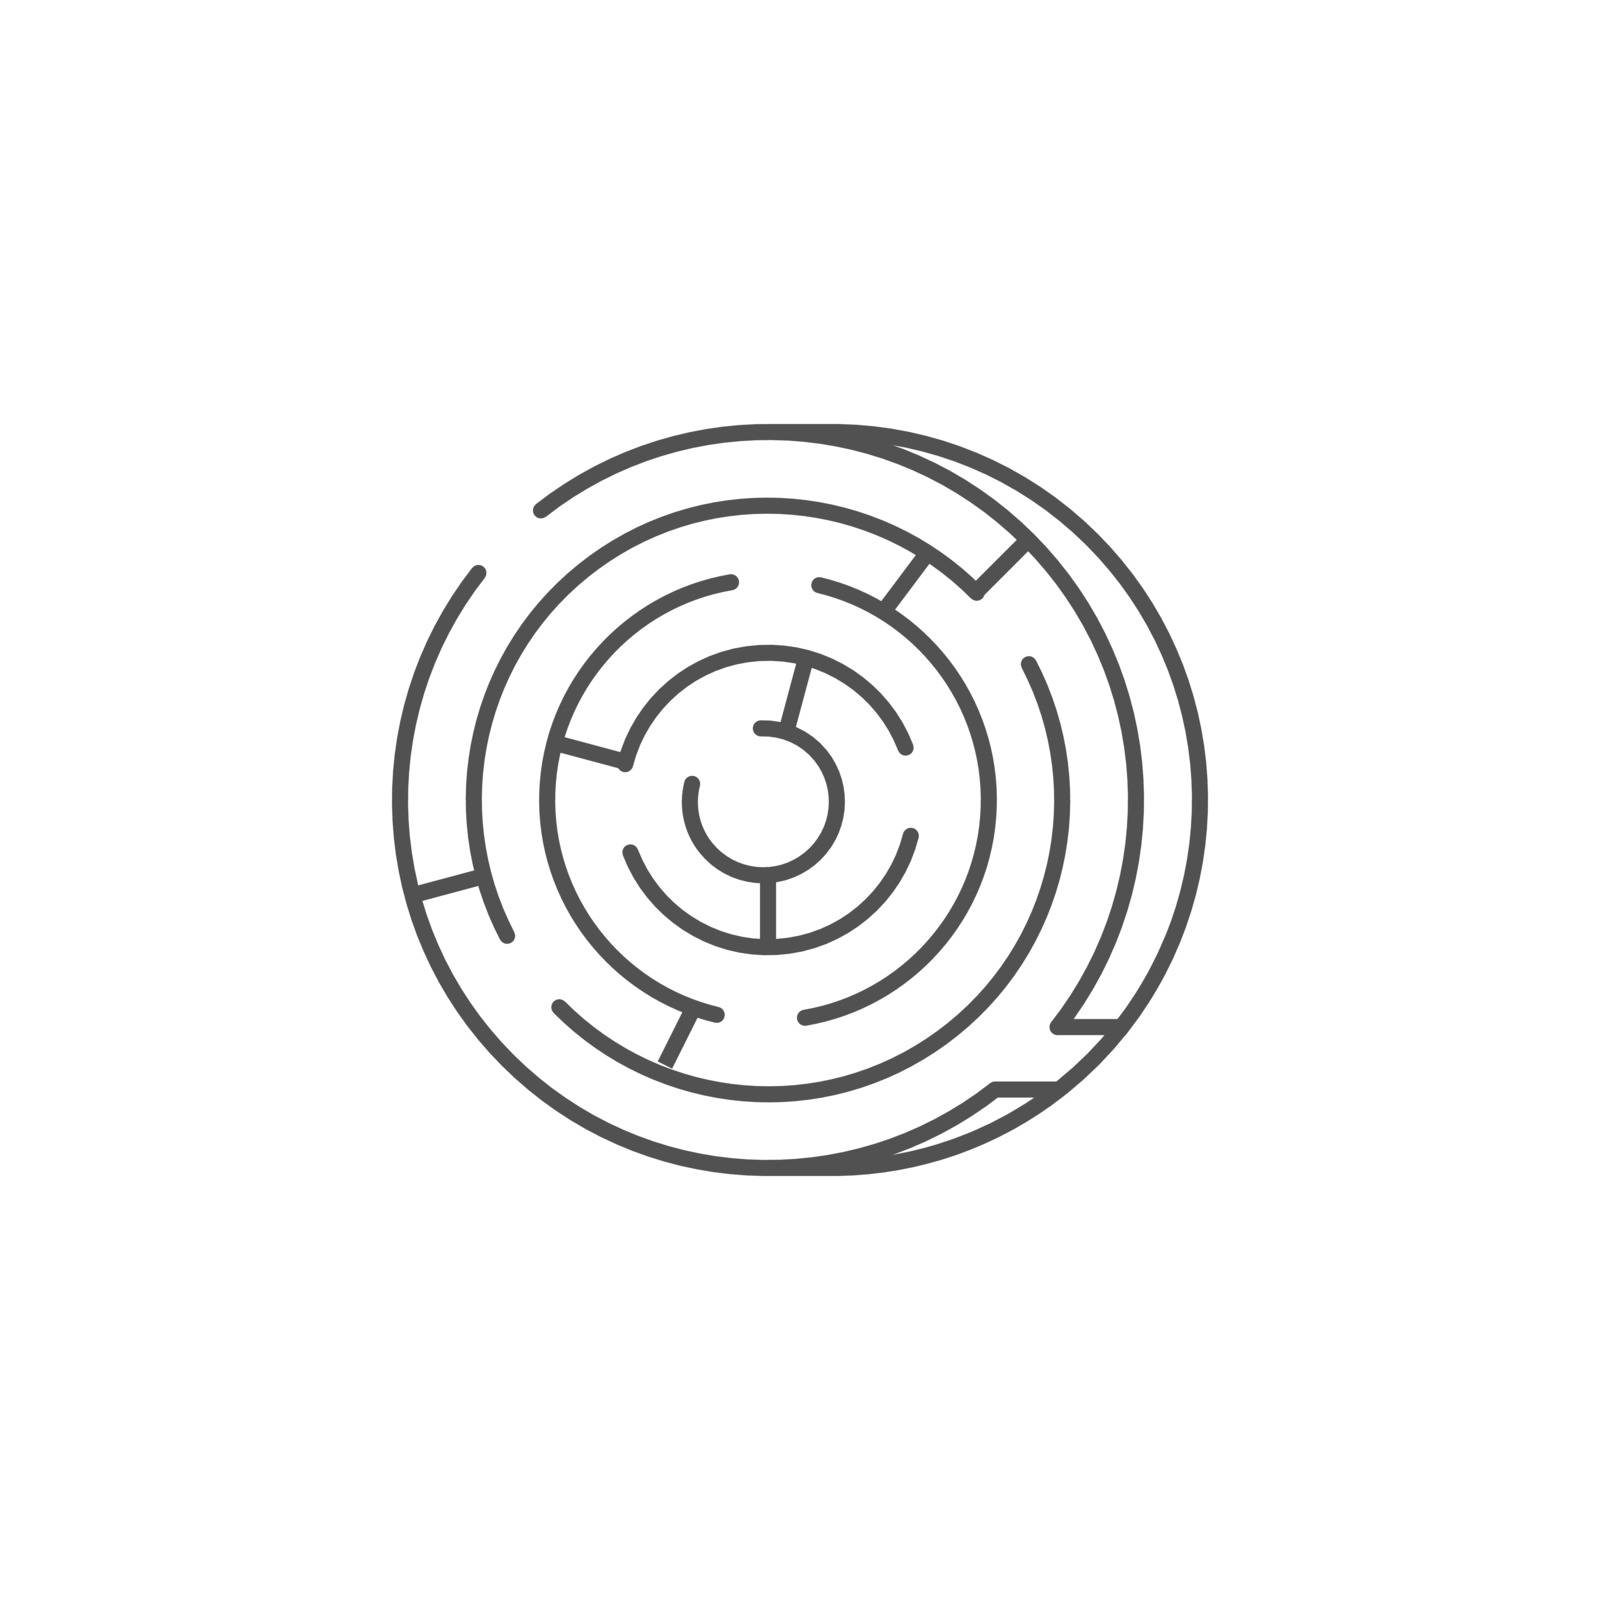 Labyrinth Thin Line Vector Icon. by smoki